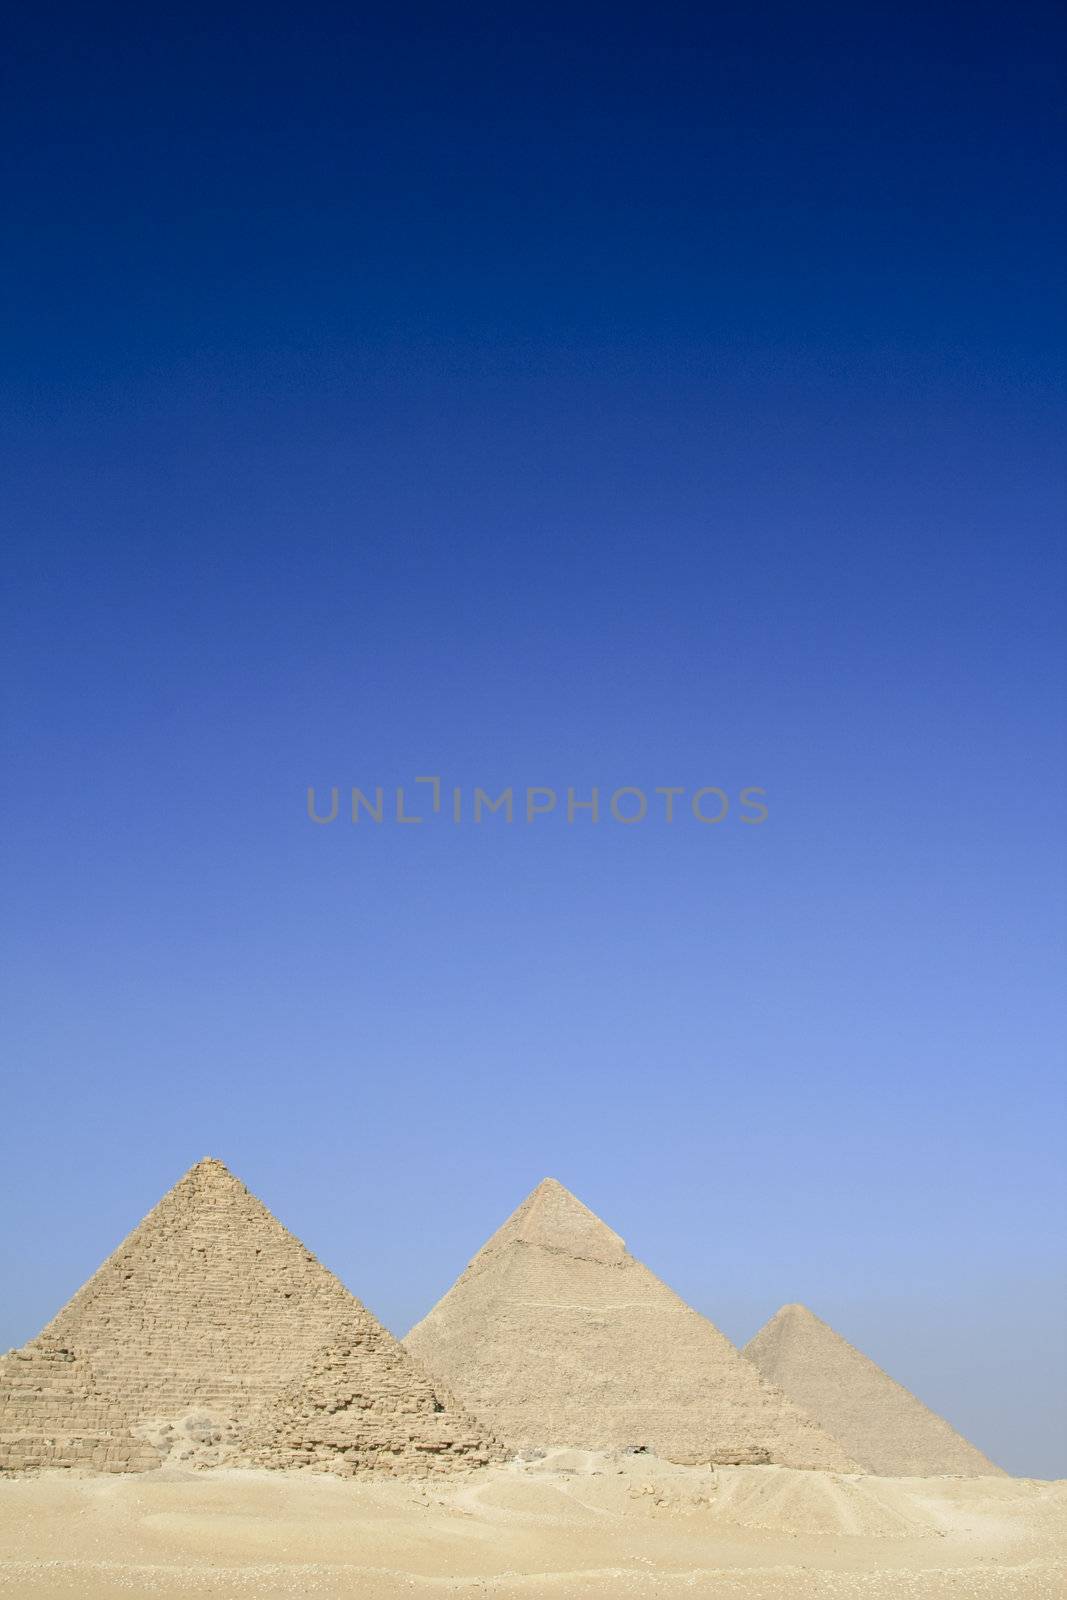 Pyramids of Giza by davidgarry